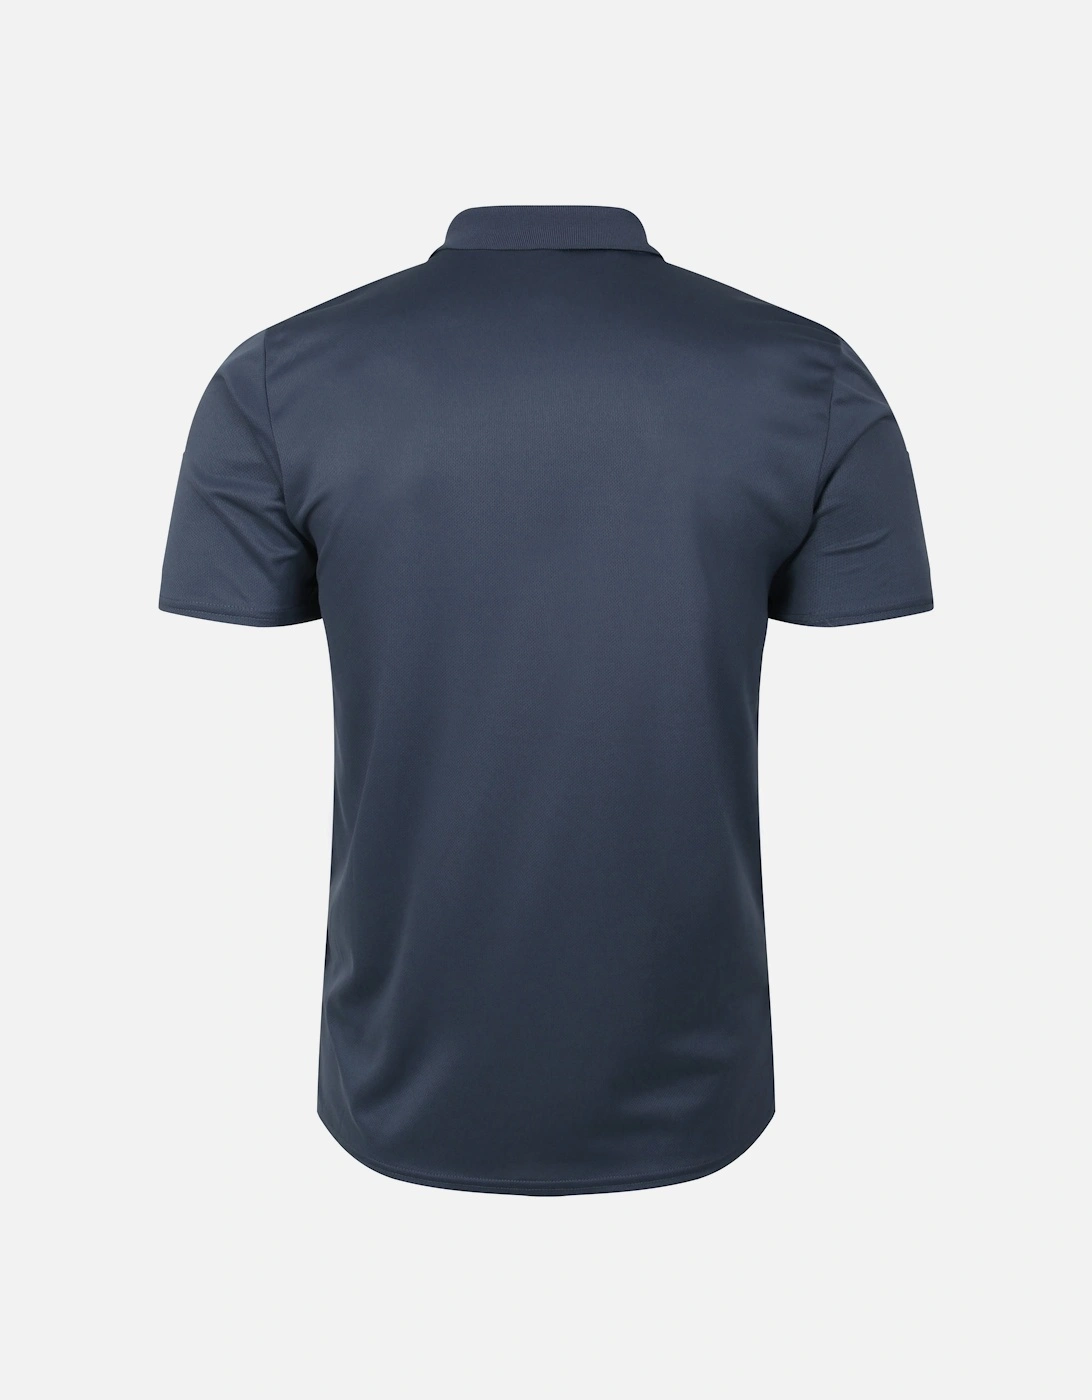 Mens 23/24 Heart Of Midlothian FC Polyester Polo Shirt